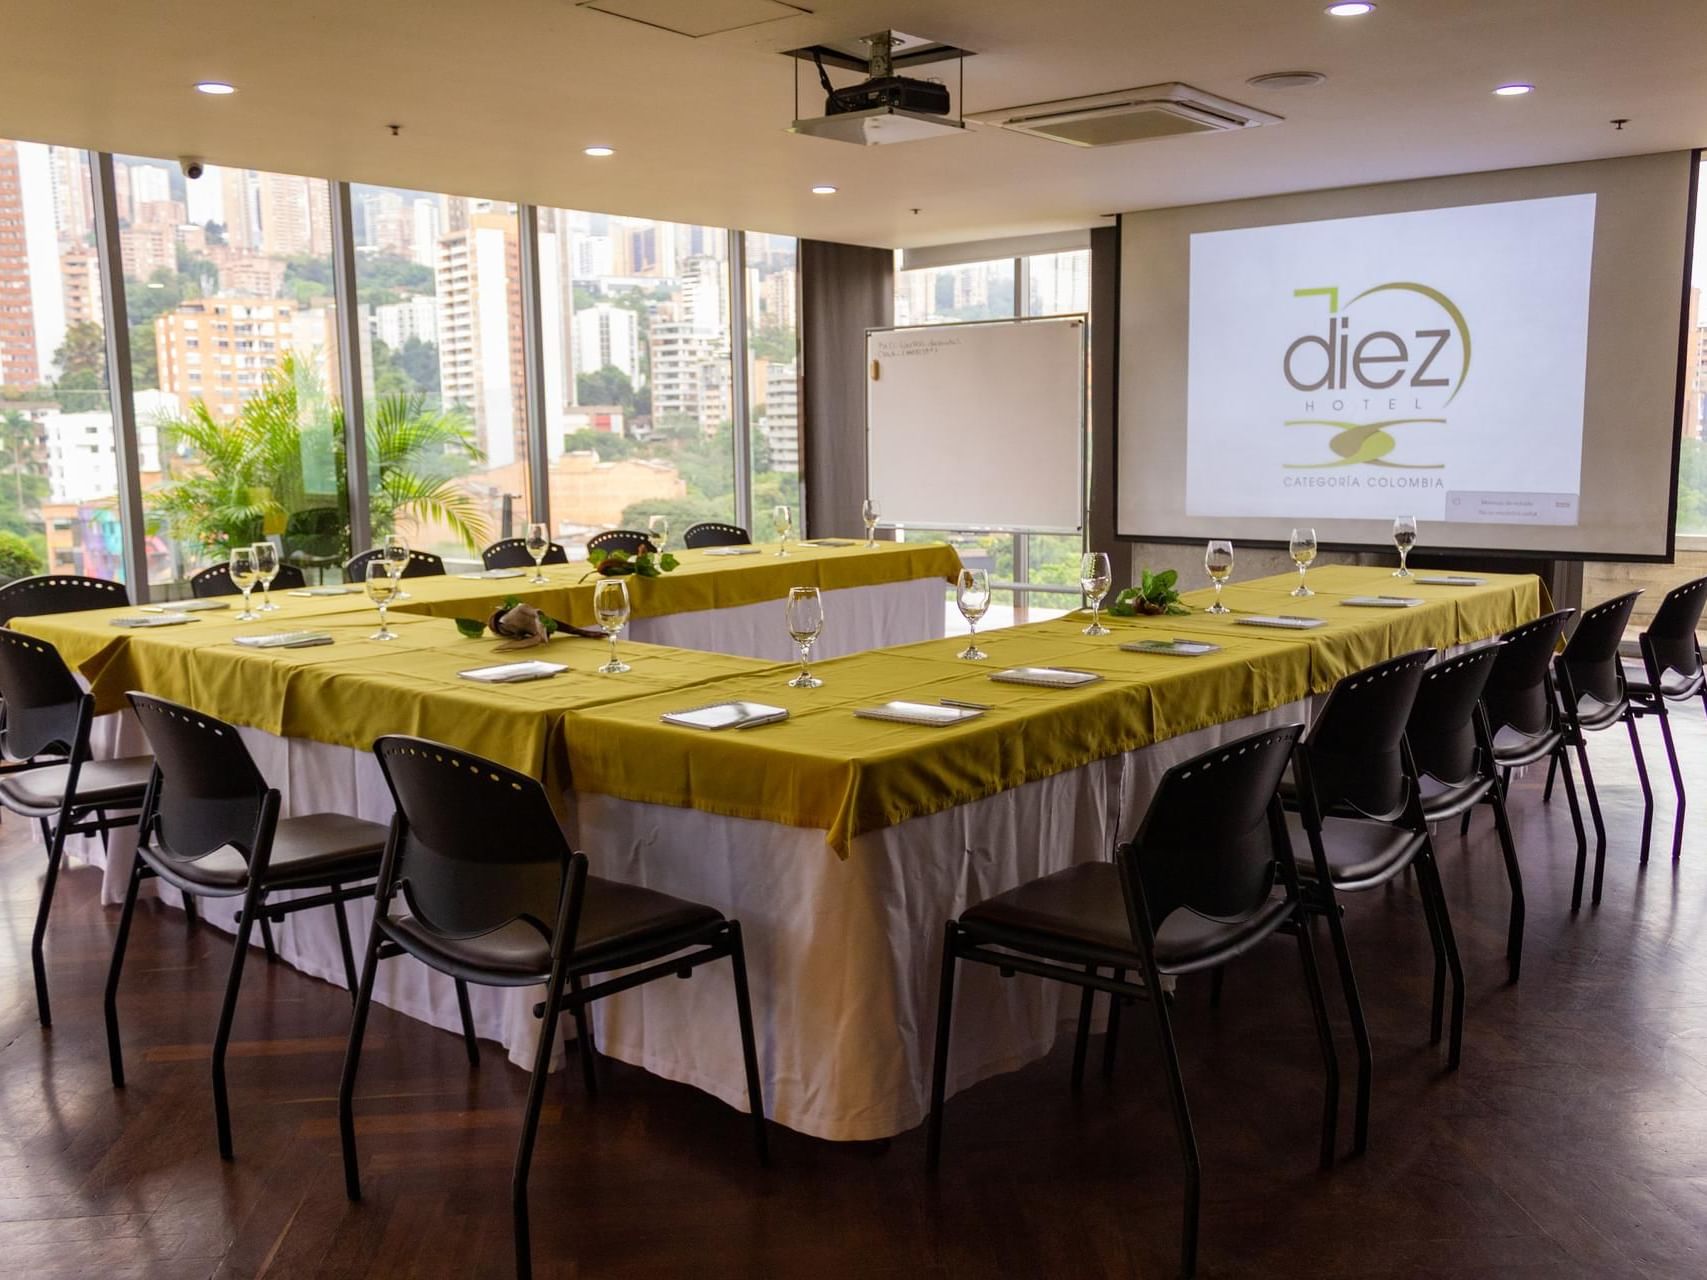 U-shape dining set-up in Caribe at Diez Hotel Categoría